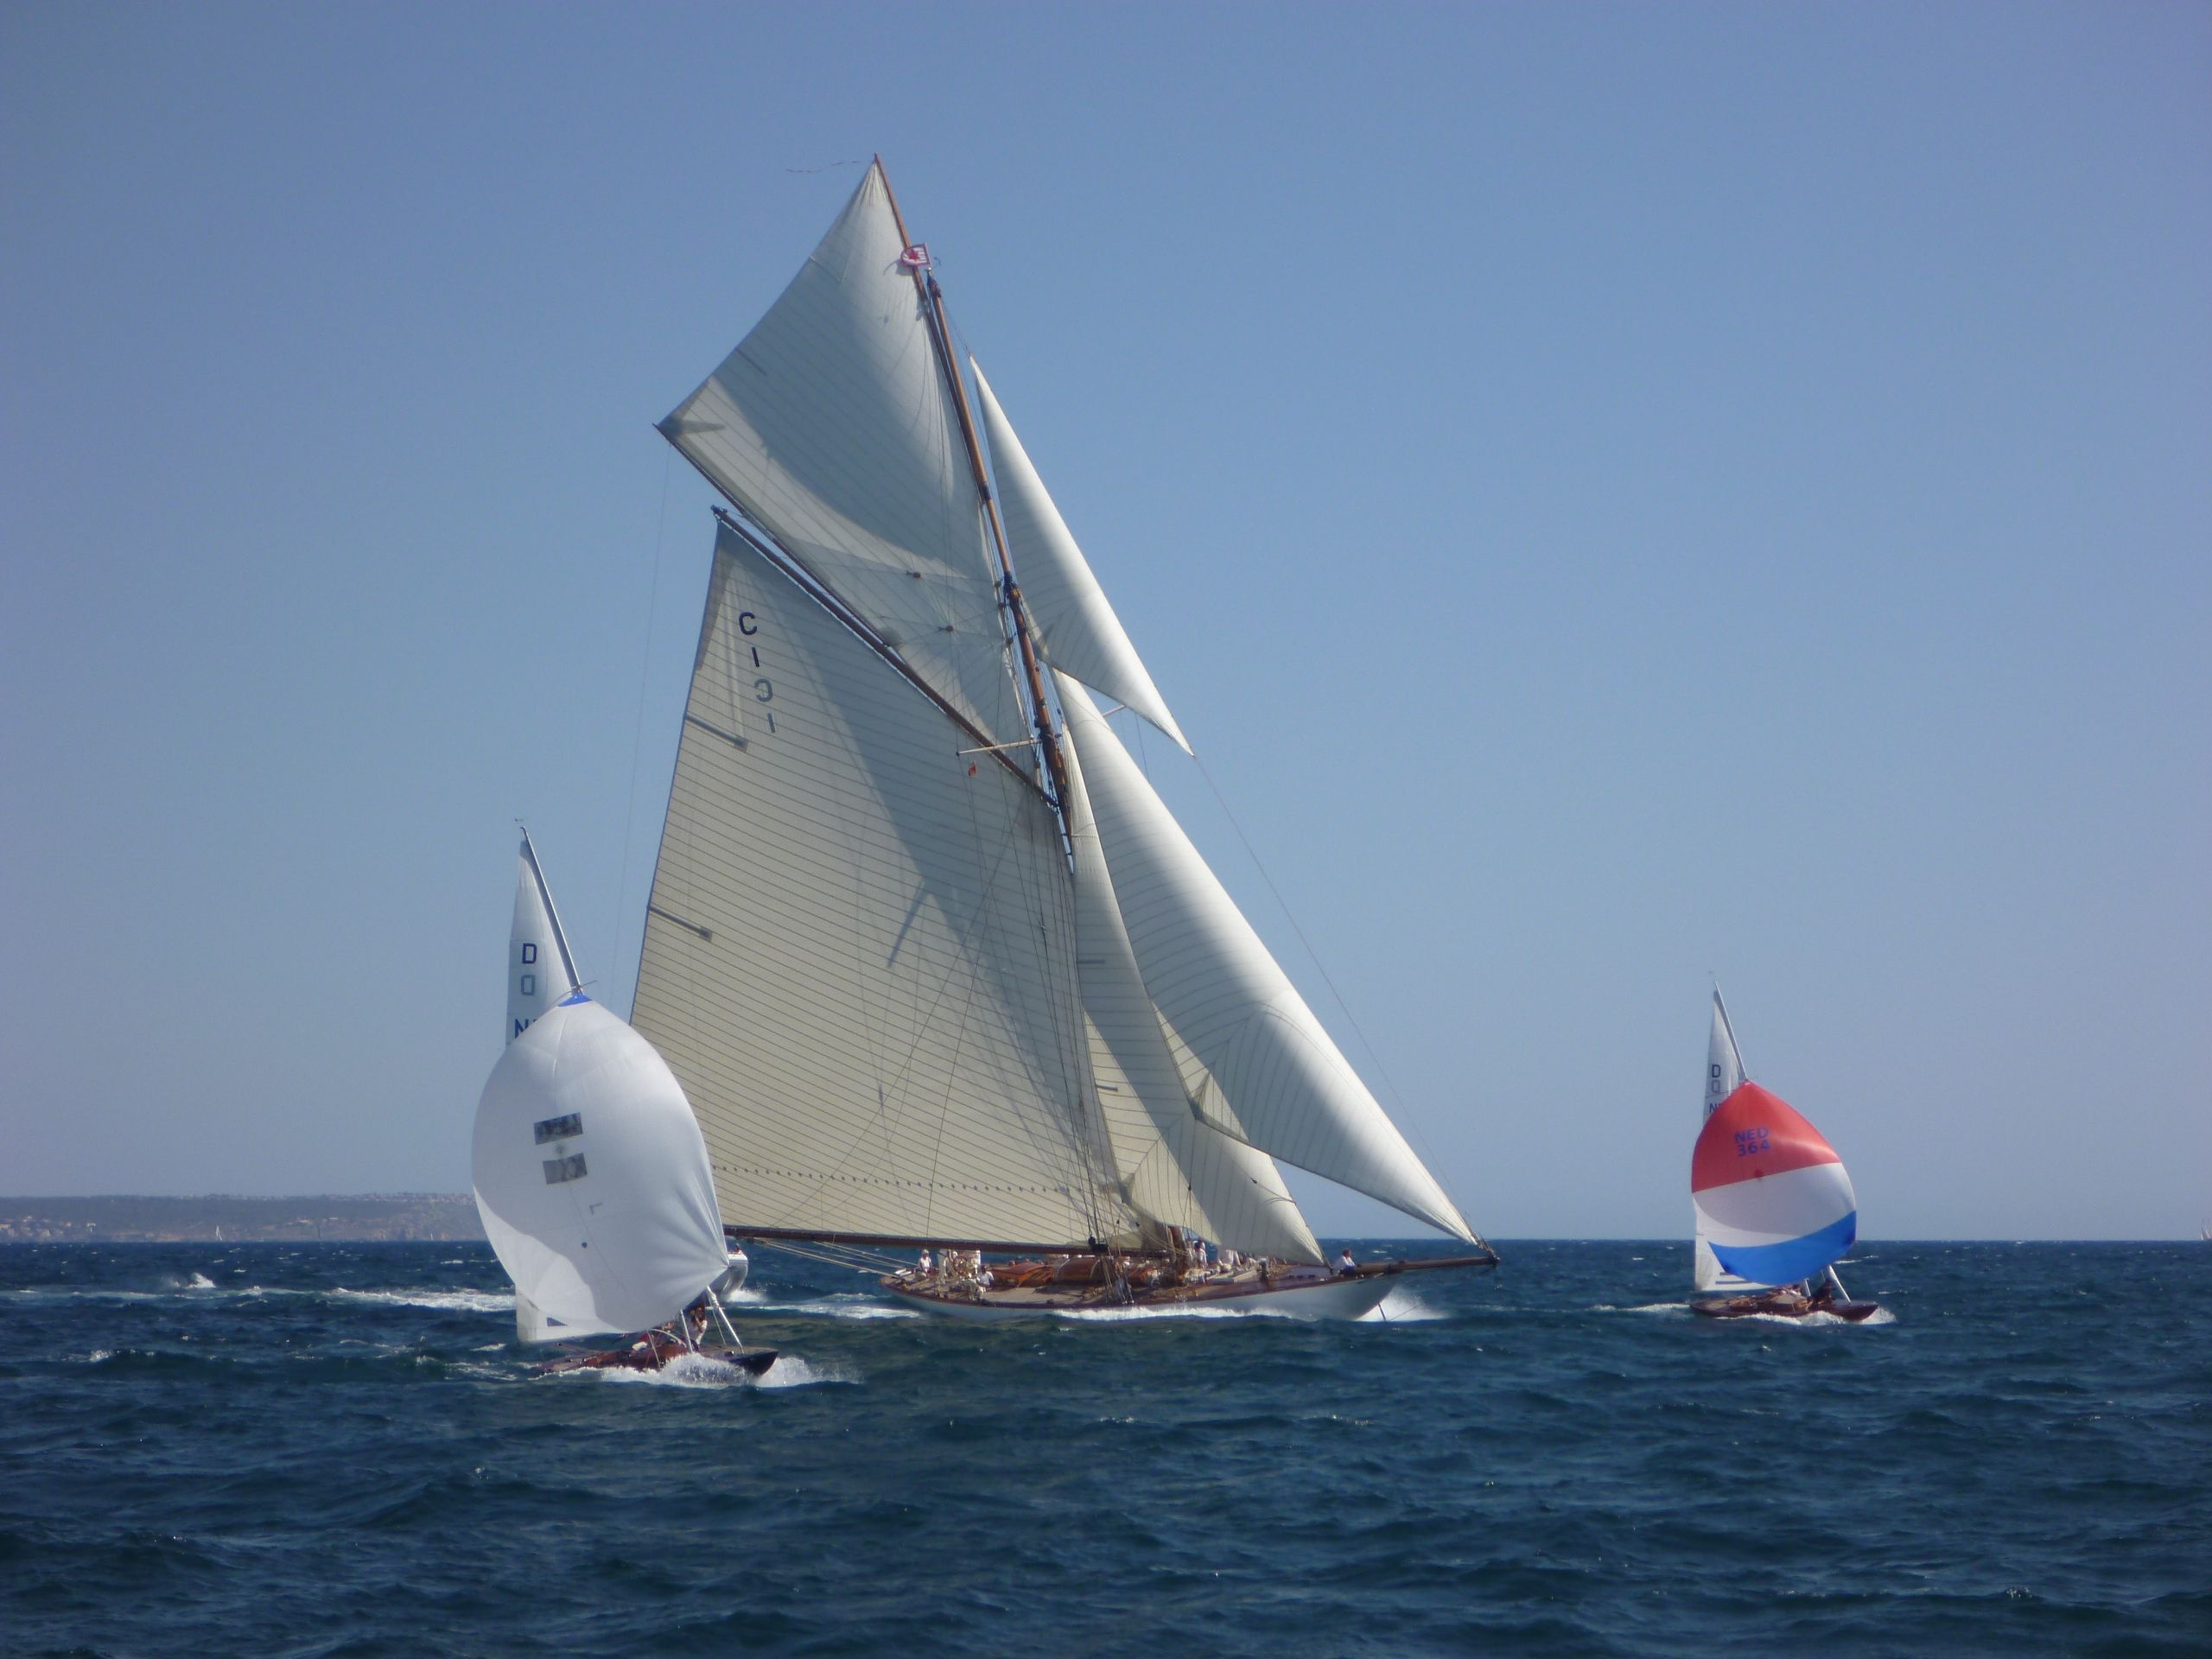 Yacht Racing: Balearic Regatta, A sport reserved for large sailboats, Windsports. 2560x1920 HD Wallpaper.